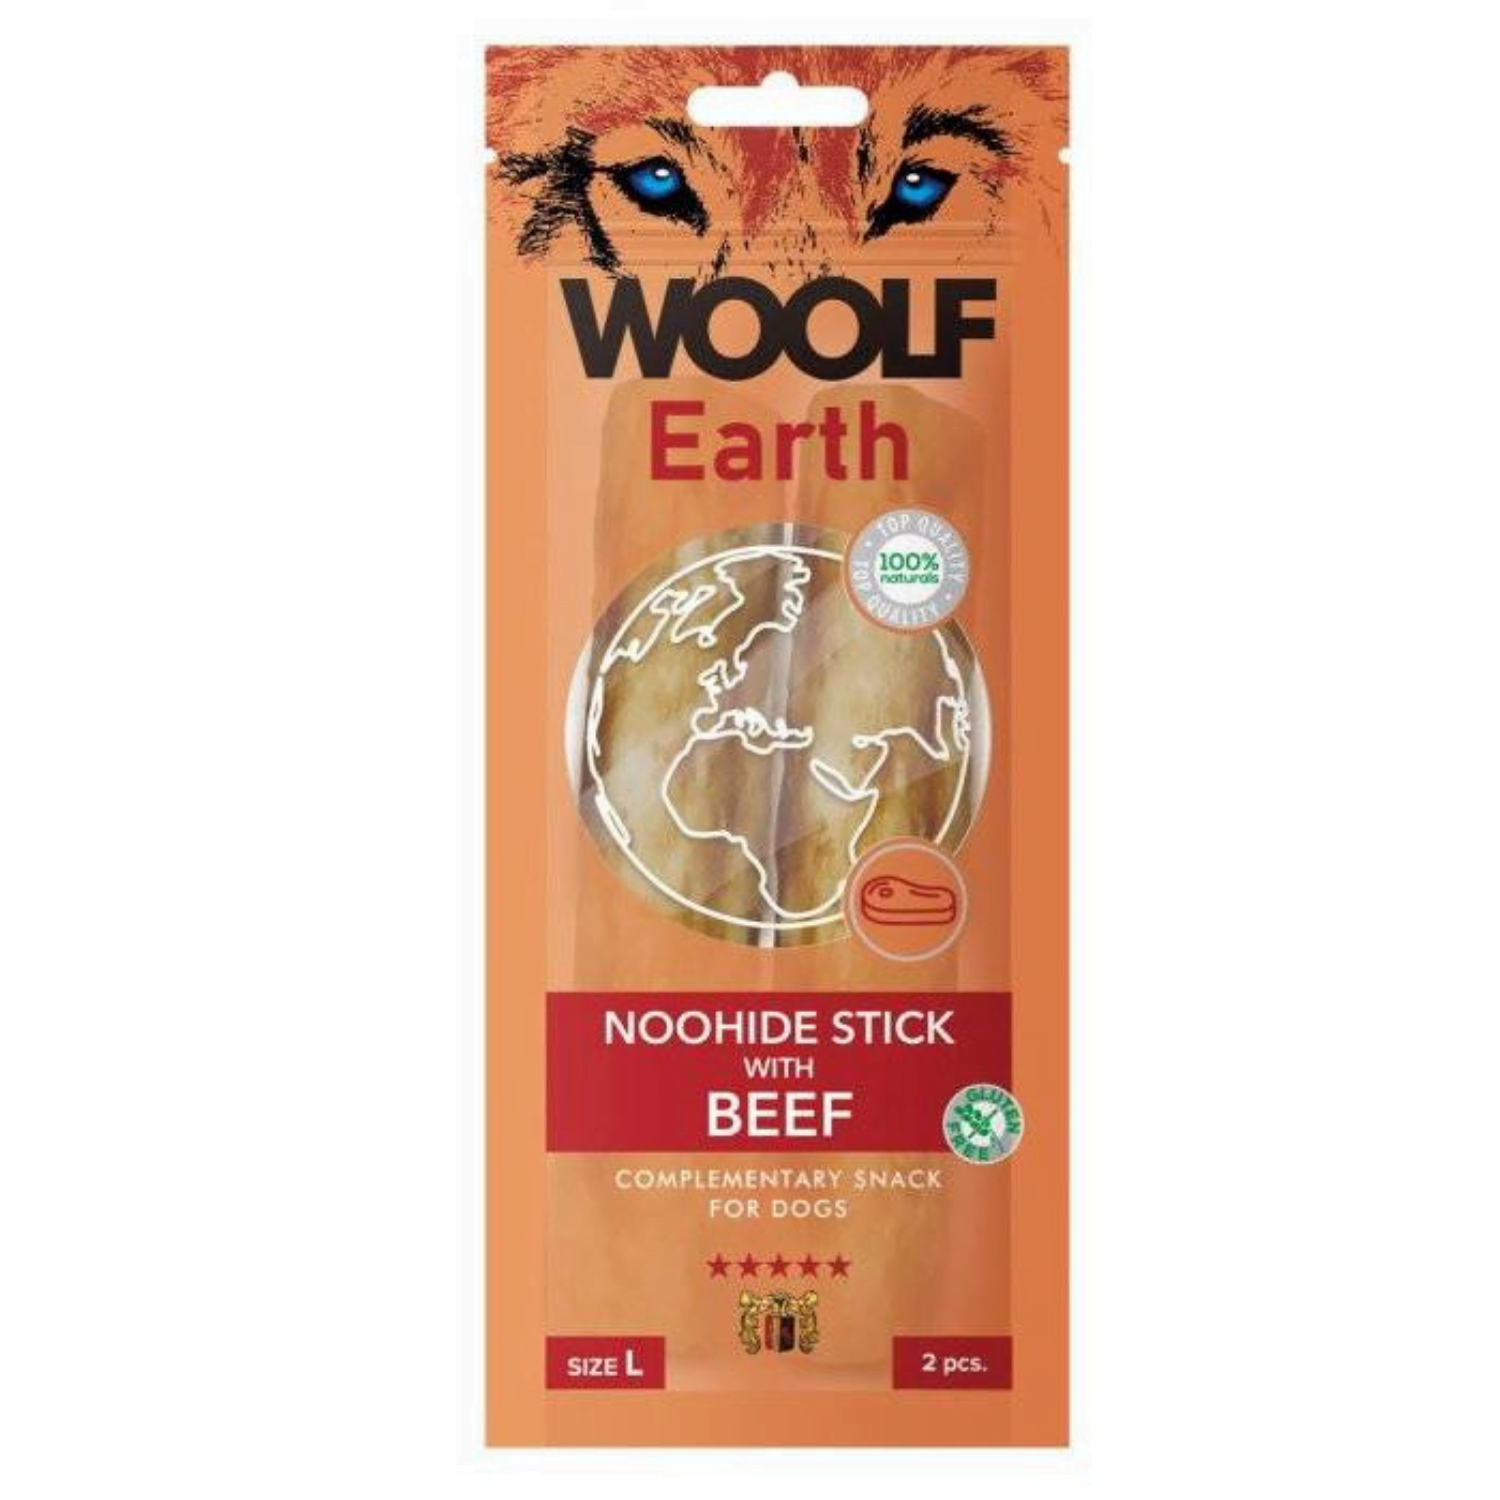 Woolf Earth Noohide Stick Beef